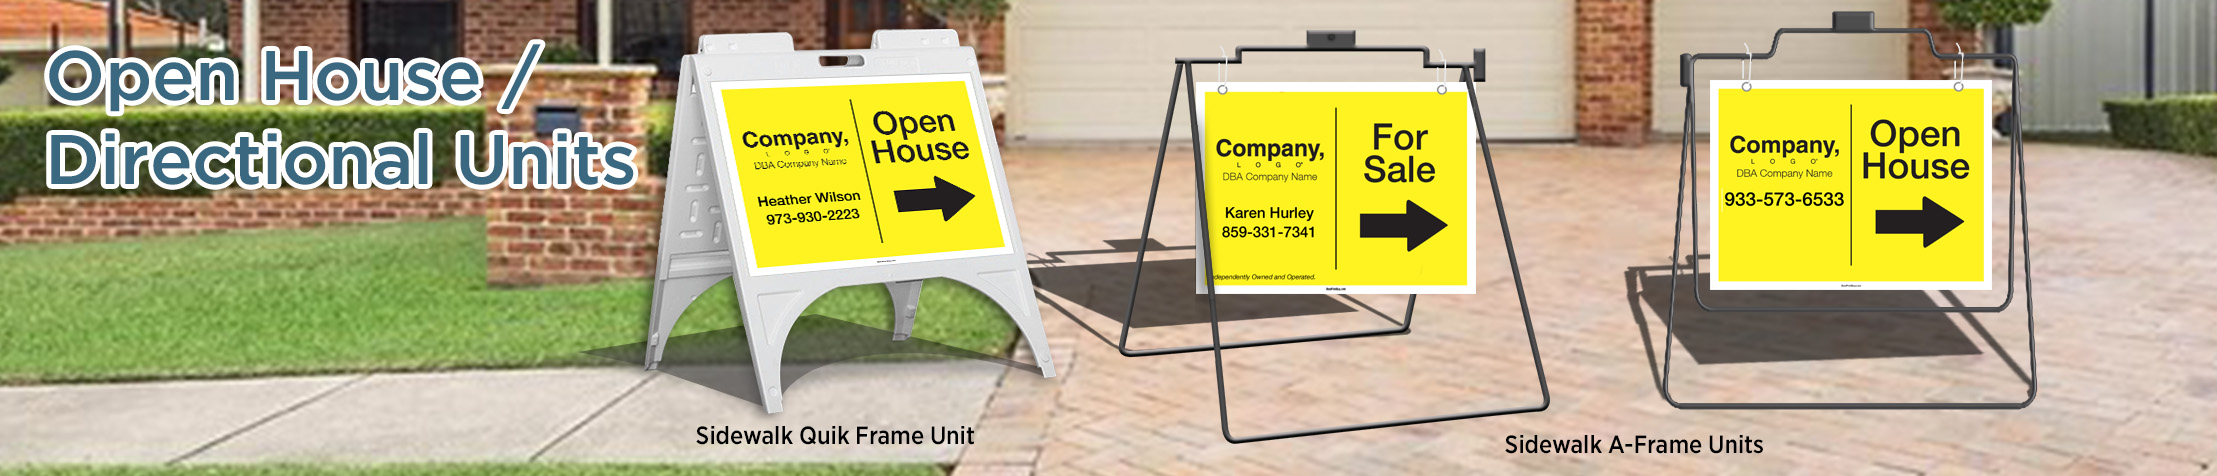 Weichert Real Estate Open House/Directional Units - real estate Sidewalk A-Frame signs | BestPrintBuy.com